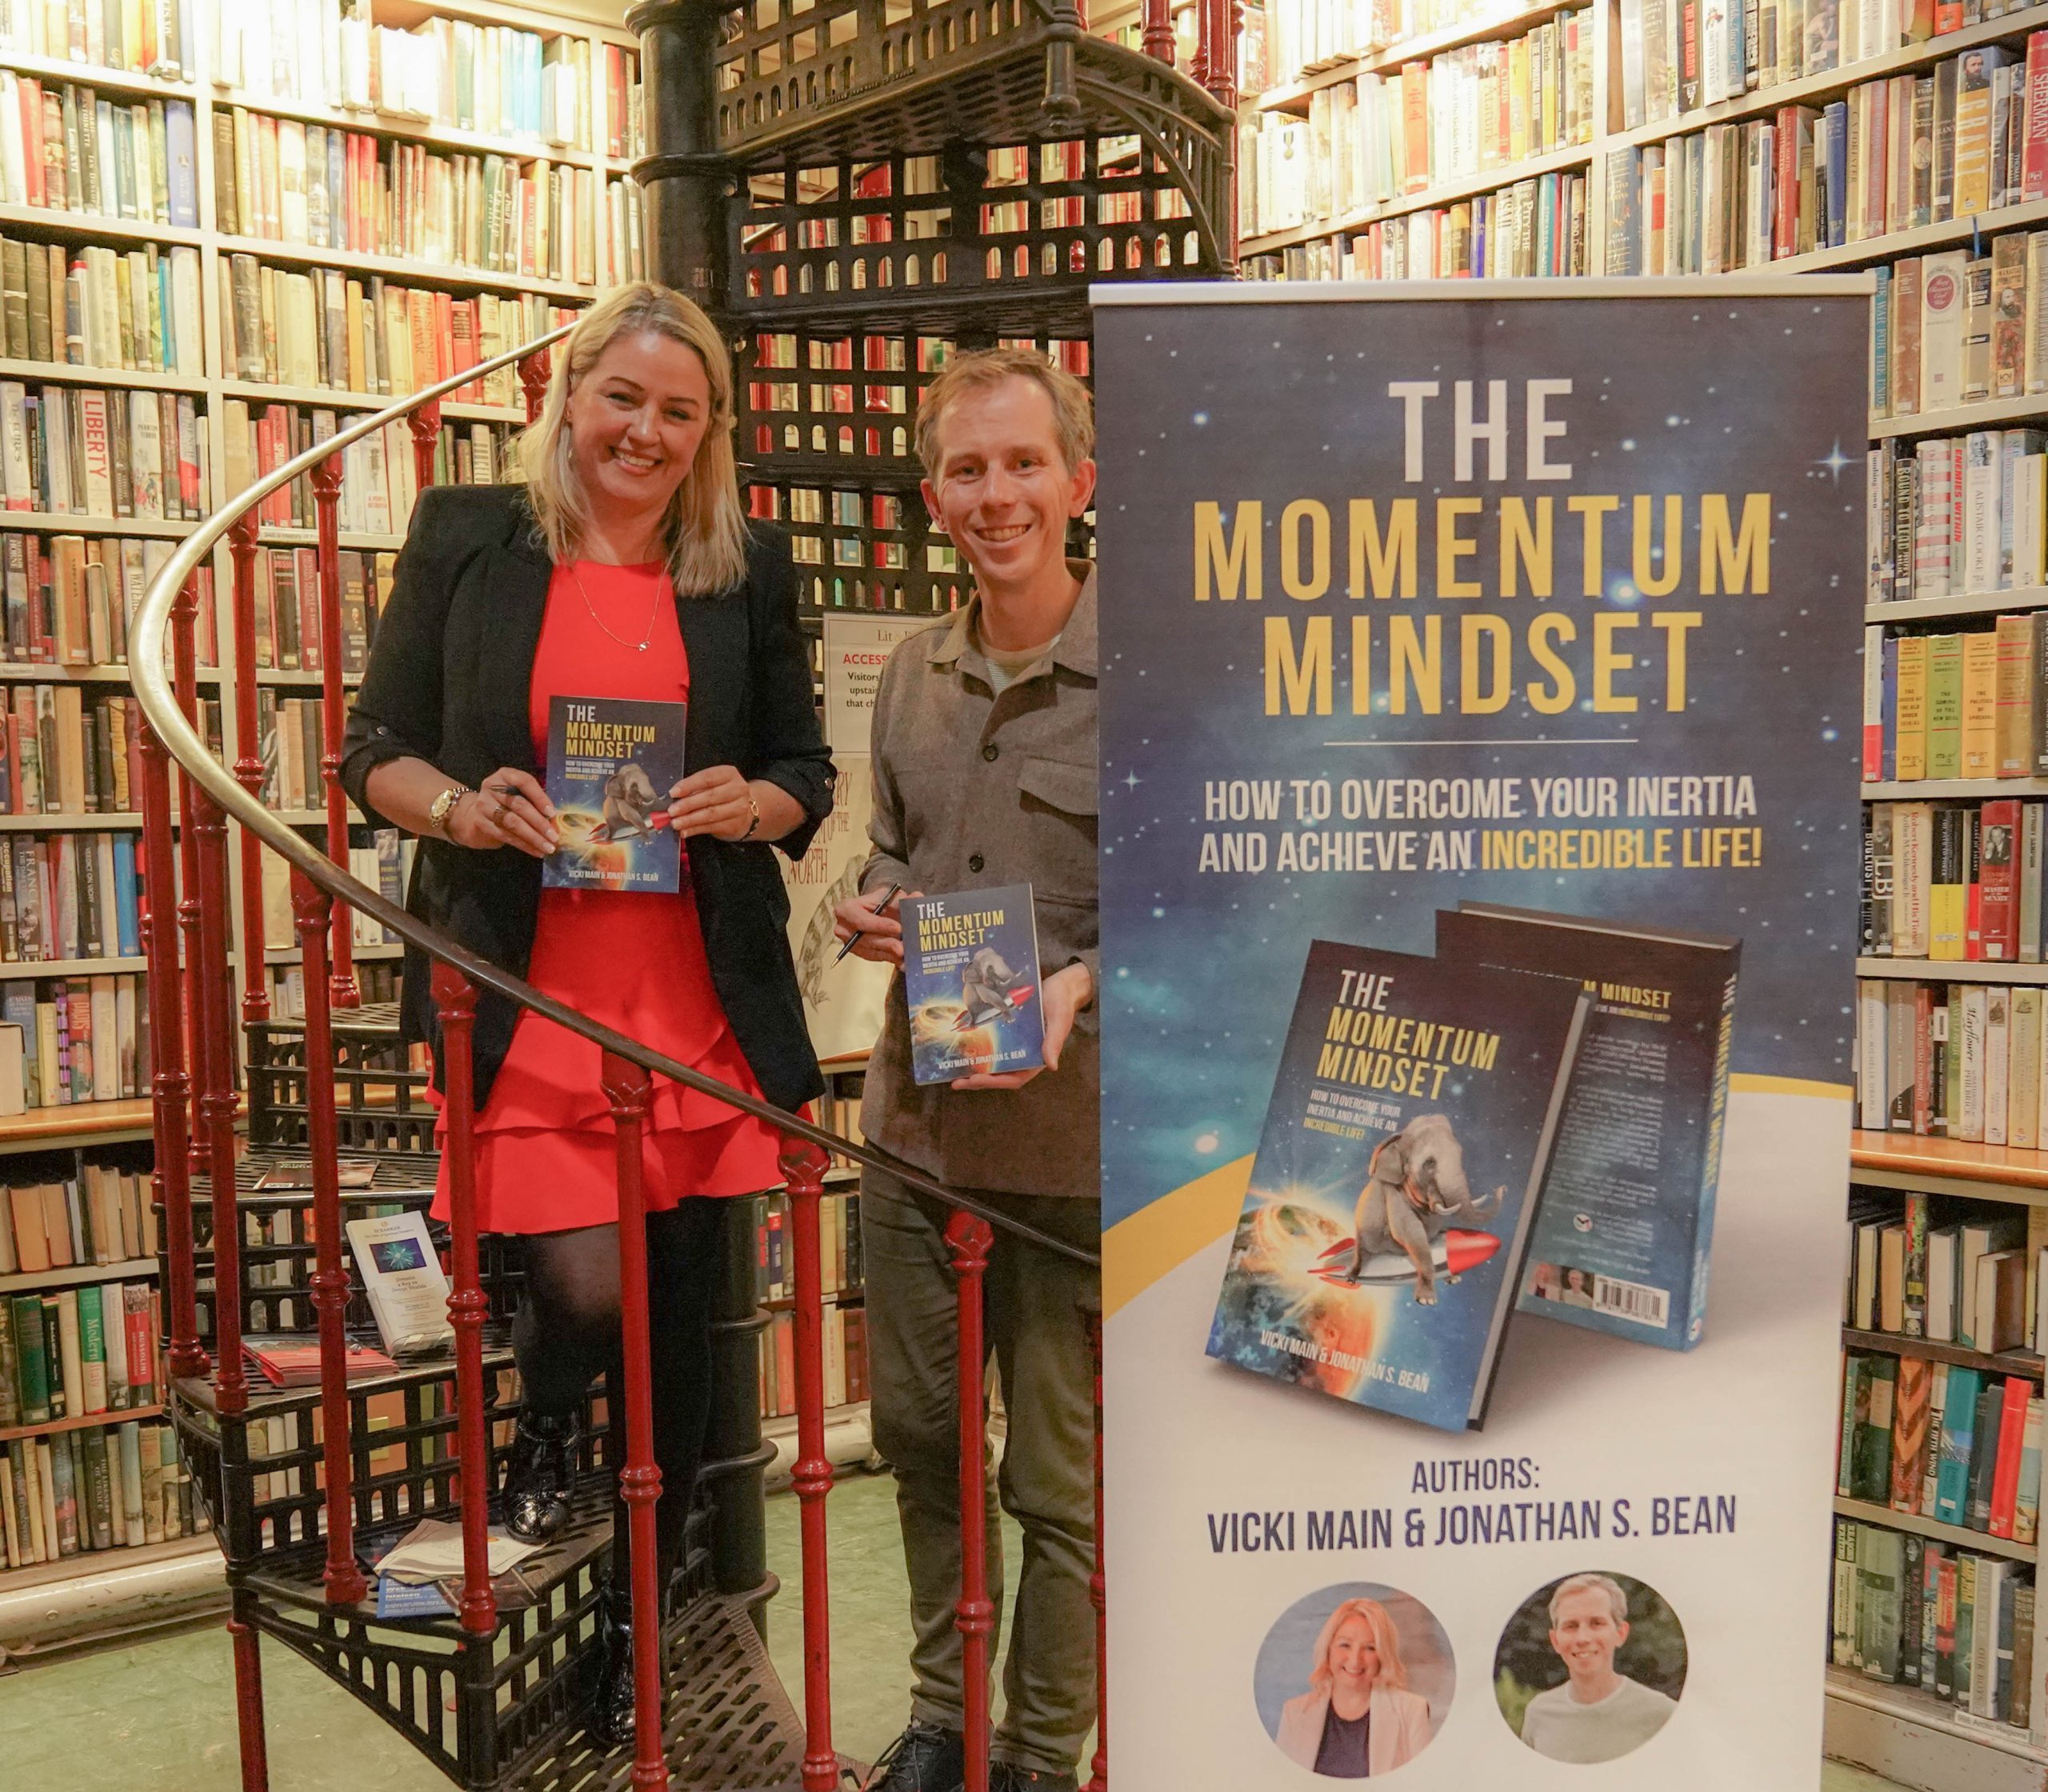 Vicki Main & Jonathan Bean holding The Momentum Mindset book